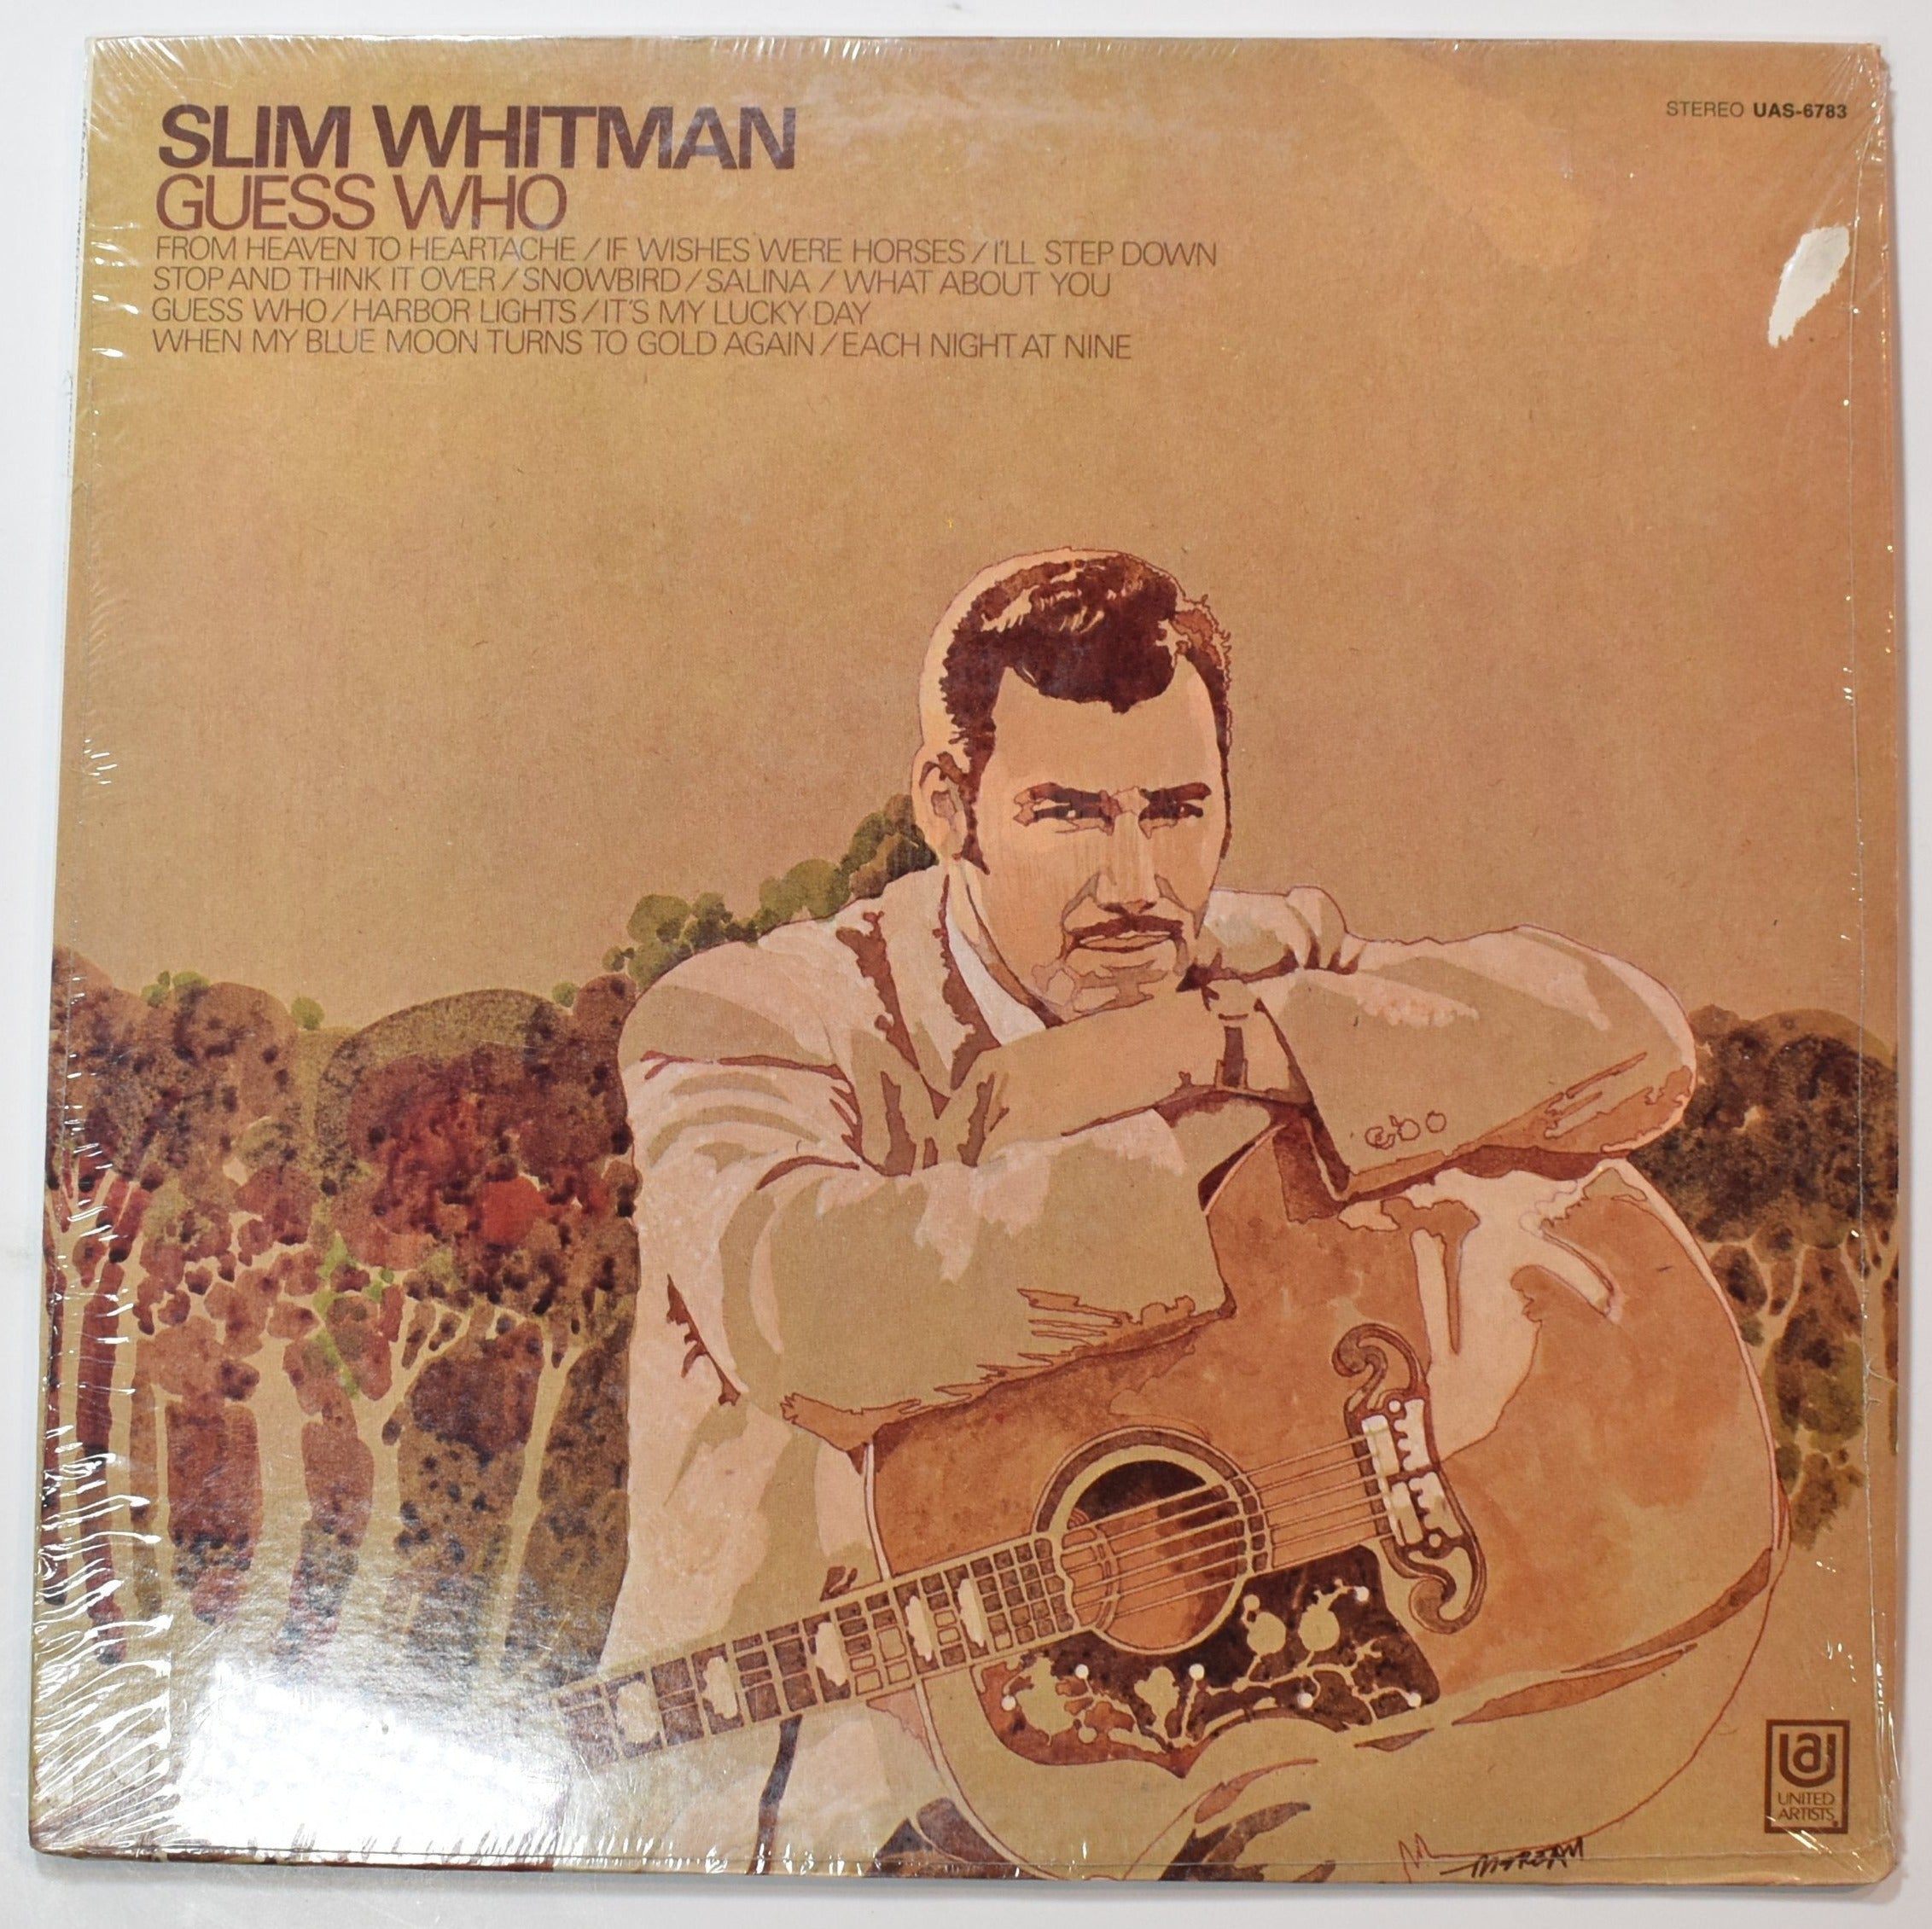 Vinyl Music Record Slim Whitman Guess Who vinyl Record